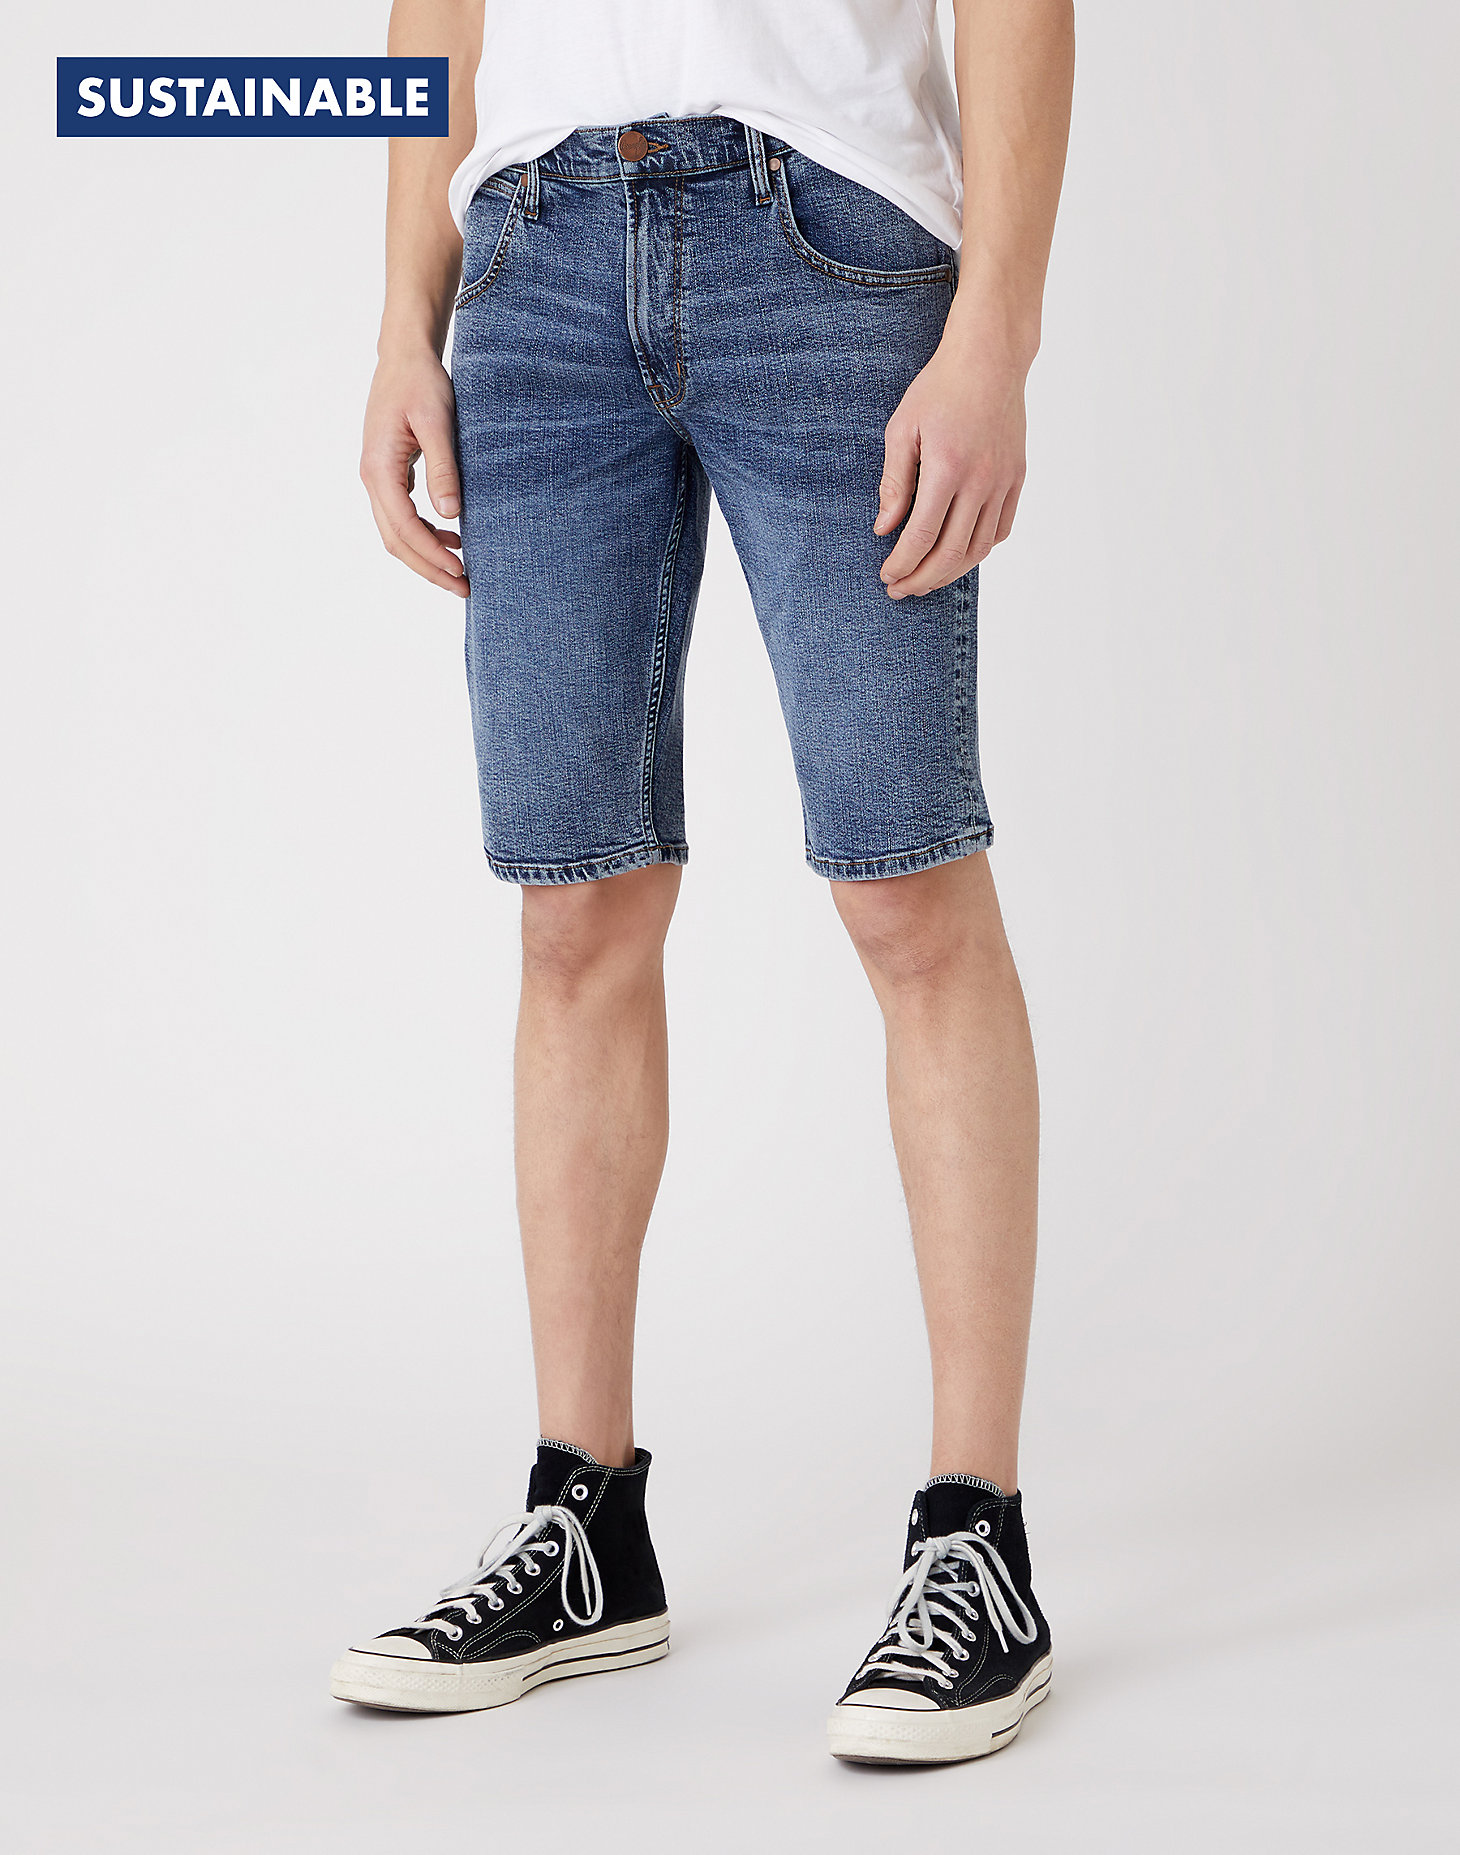 MODA DONNA Jeans Consumato Blu 40 EU: 36 High Waist Shorts Pantaloncini jeans sconto 93% 